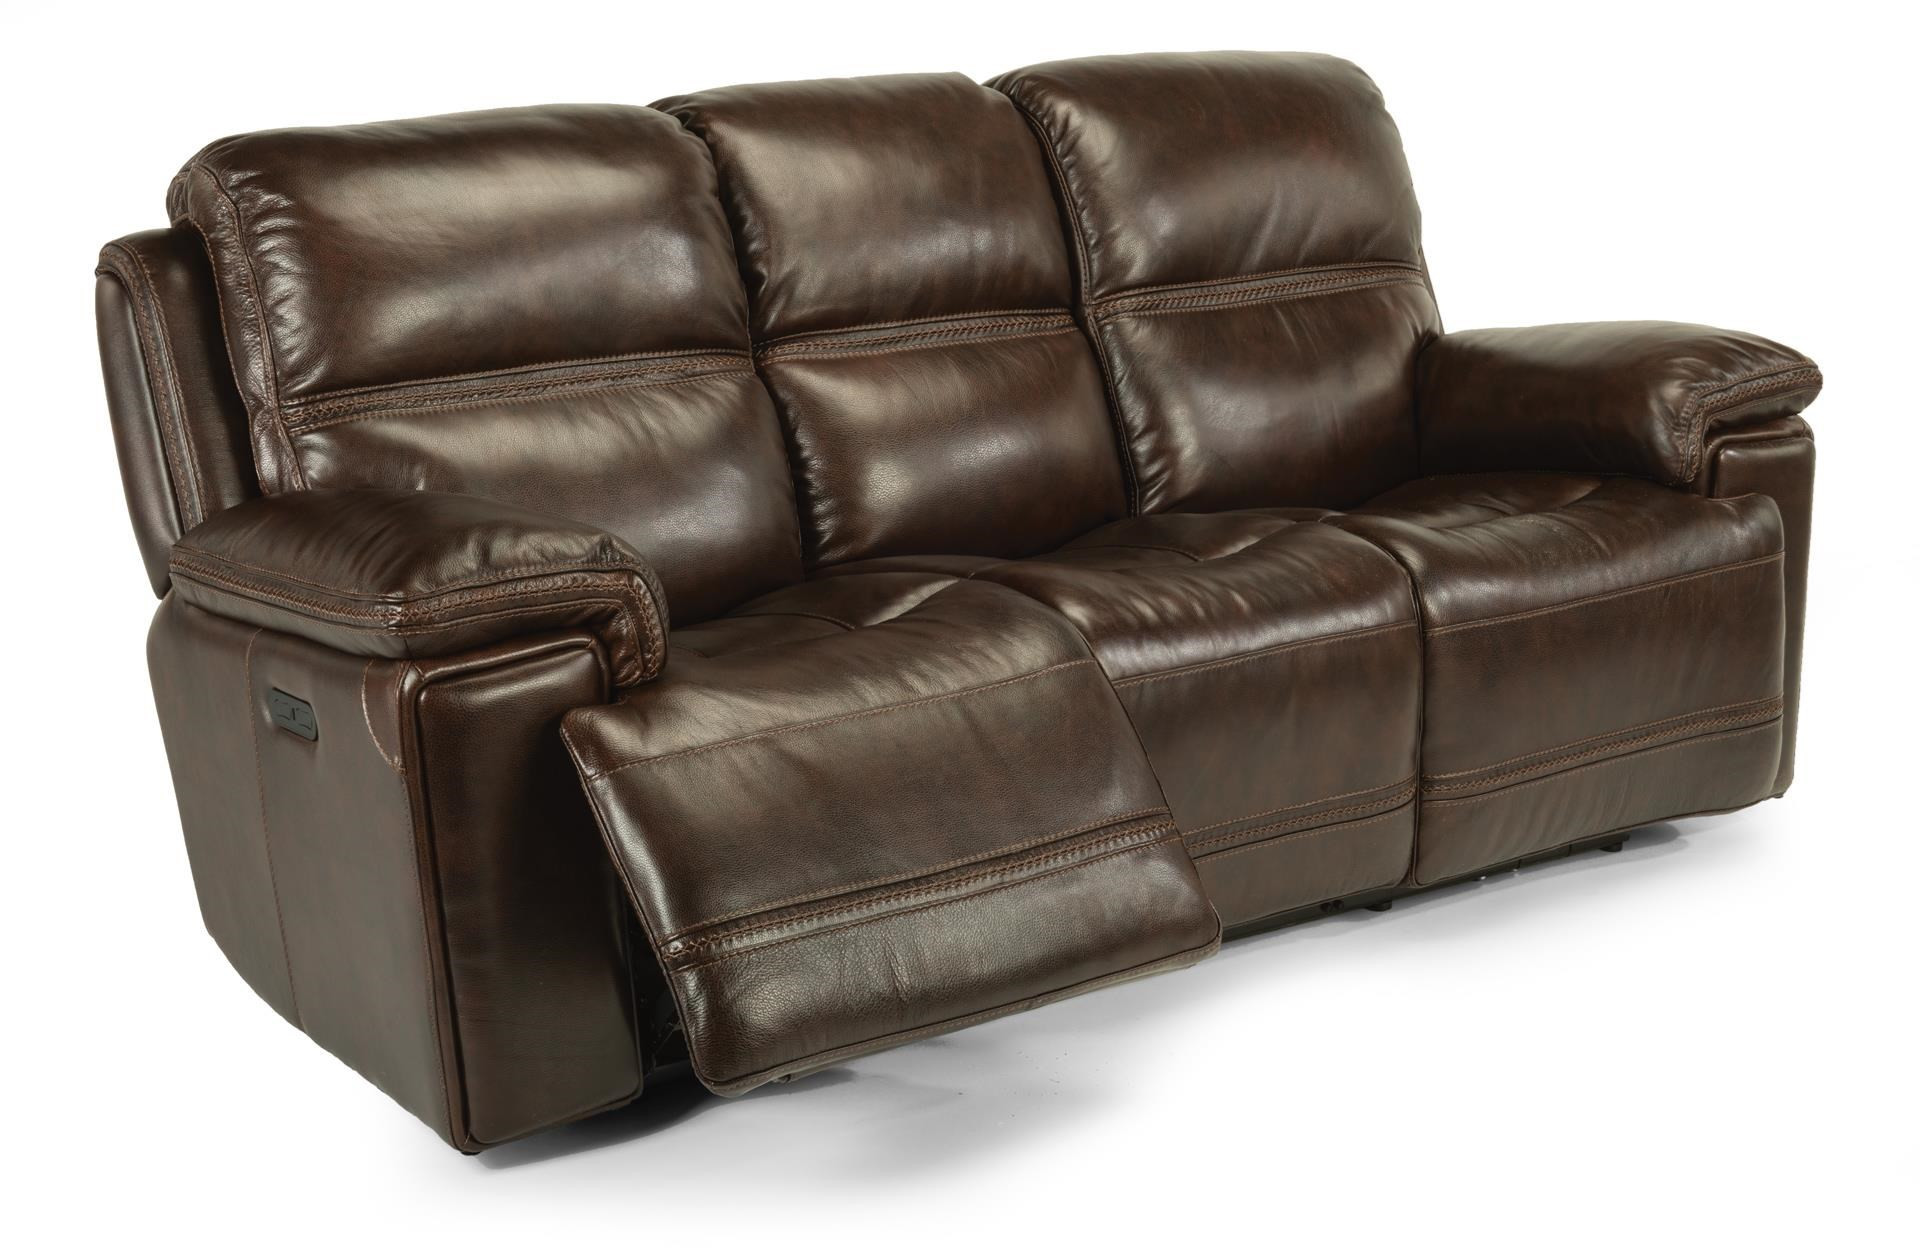 Best ideas about Flexsteel Leather Reclining Sofa
. Save or Pin Flexsteel Latitudes Fenwick 1659 62PH 204 70 Leather Power Now.